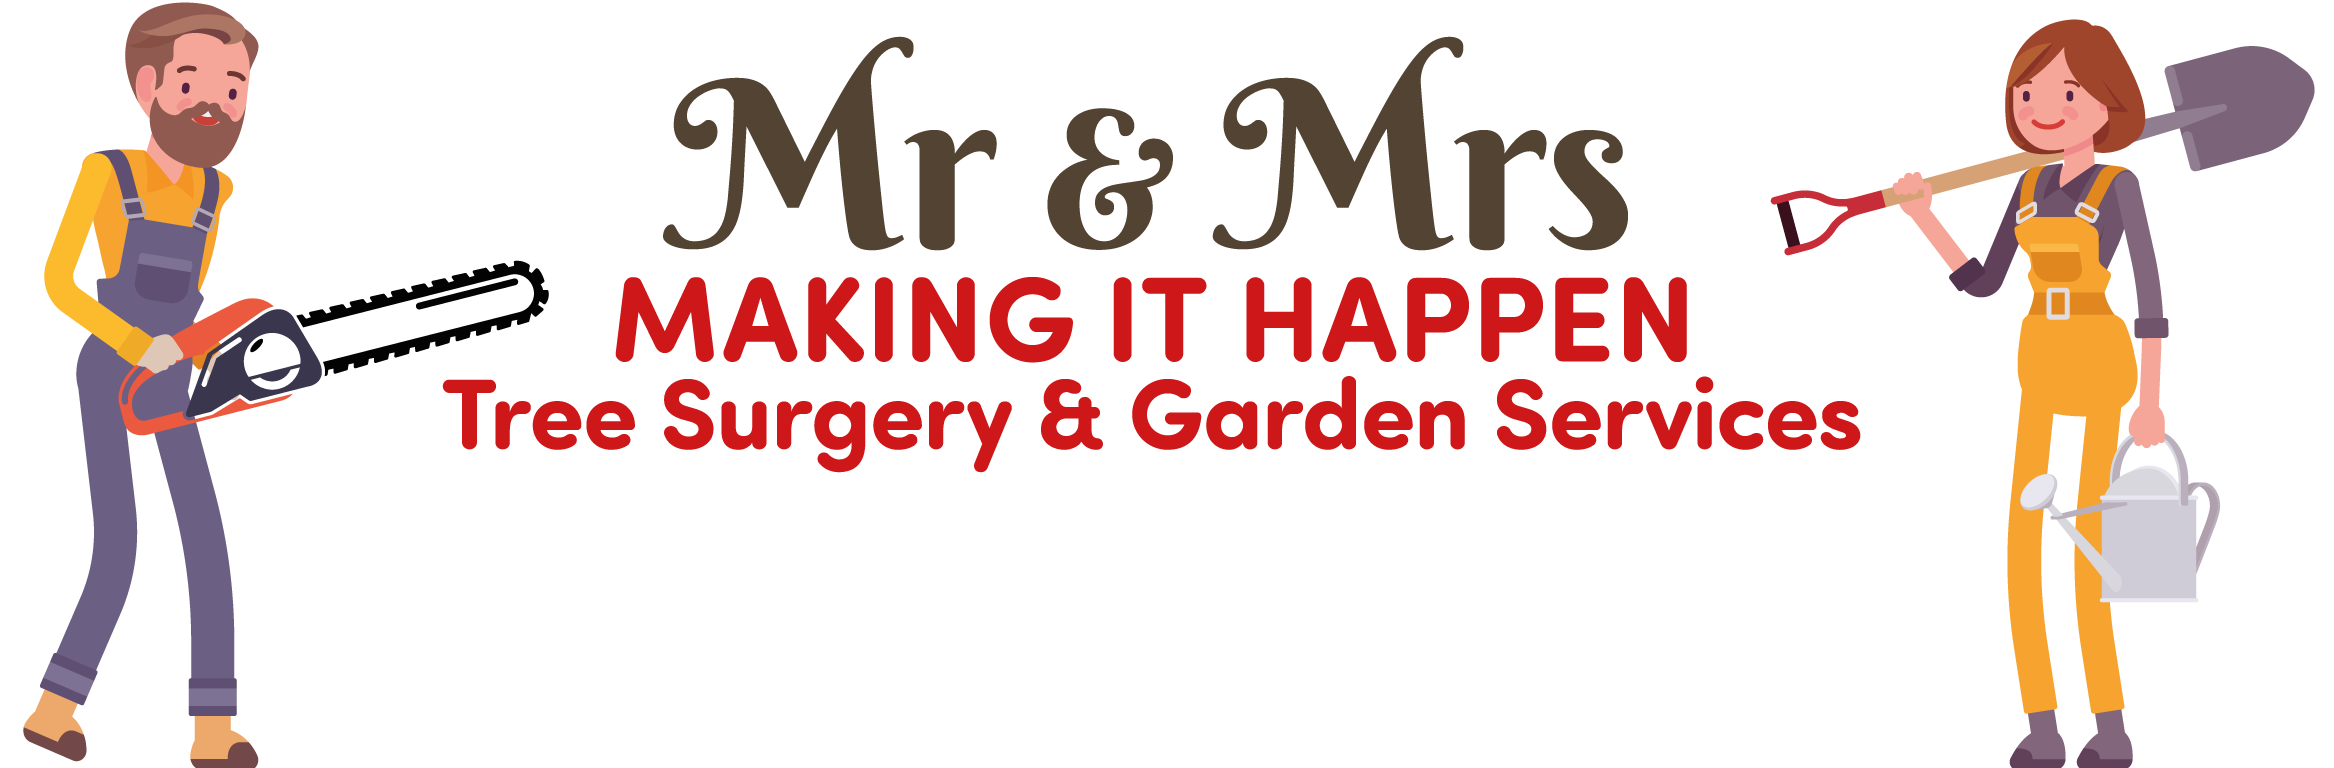 Mr & Mrs Making it Happen Tree Surgery & Garden Services